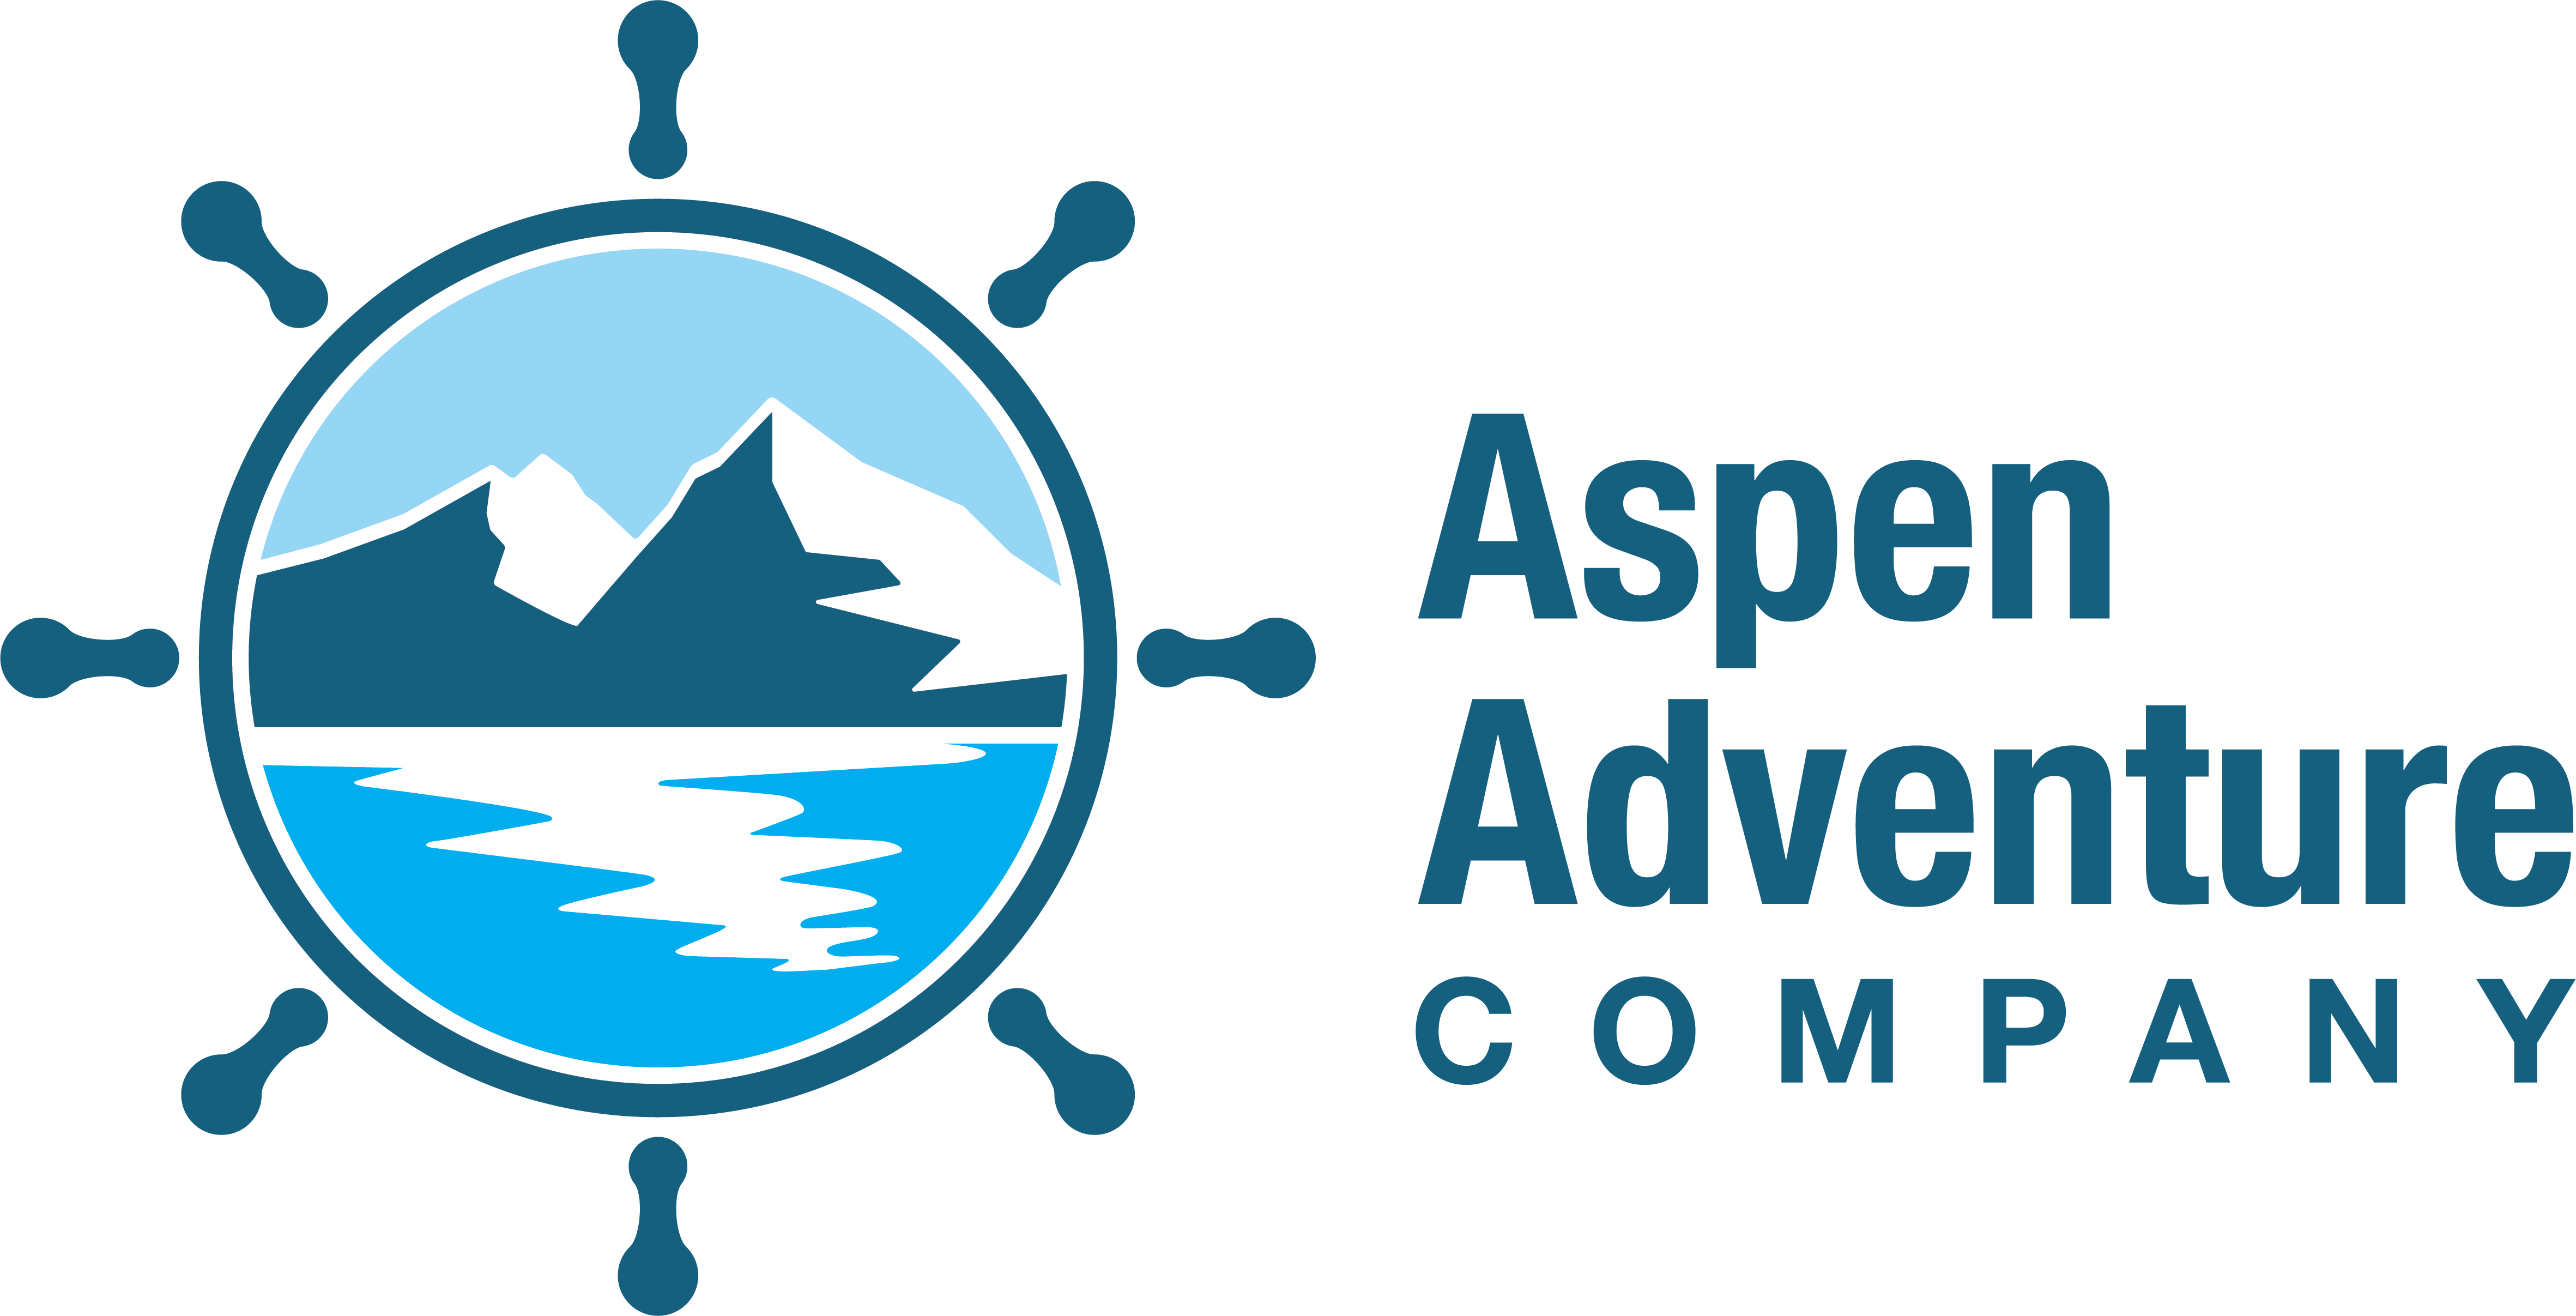 Aspen Adventure Company - Boat rent, SUP rent, Tubing, Hiking